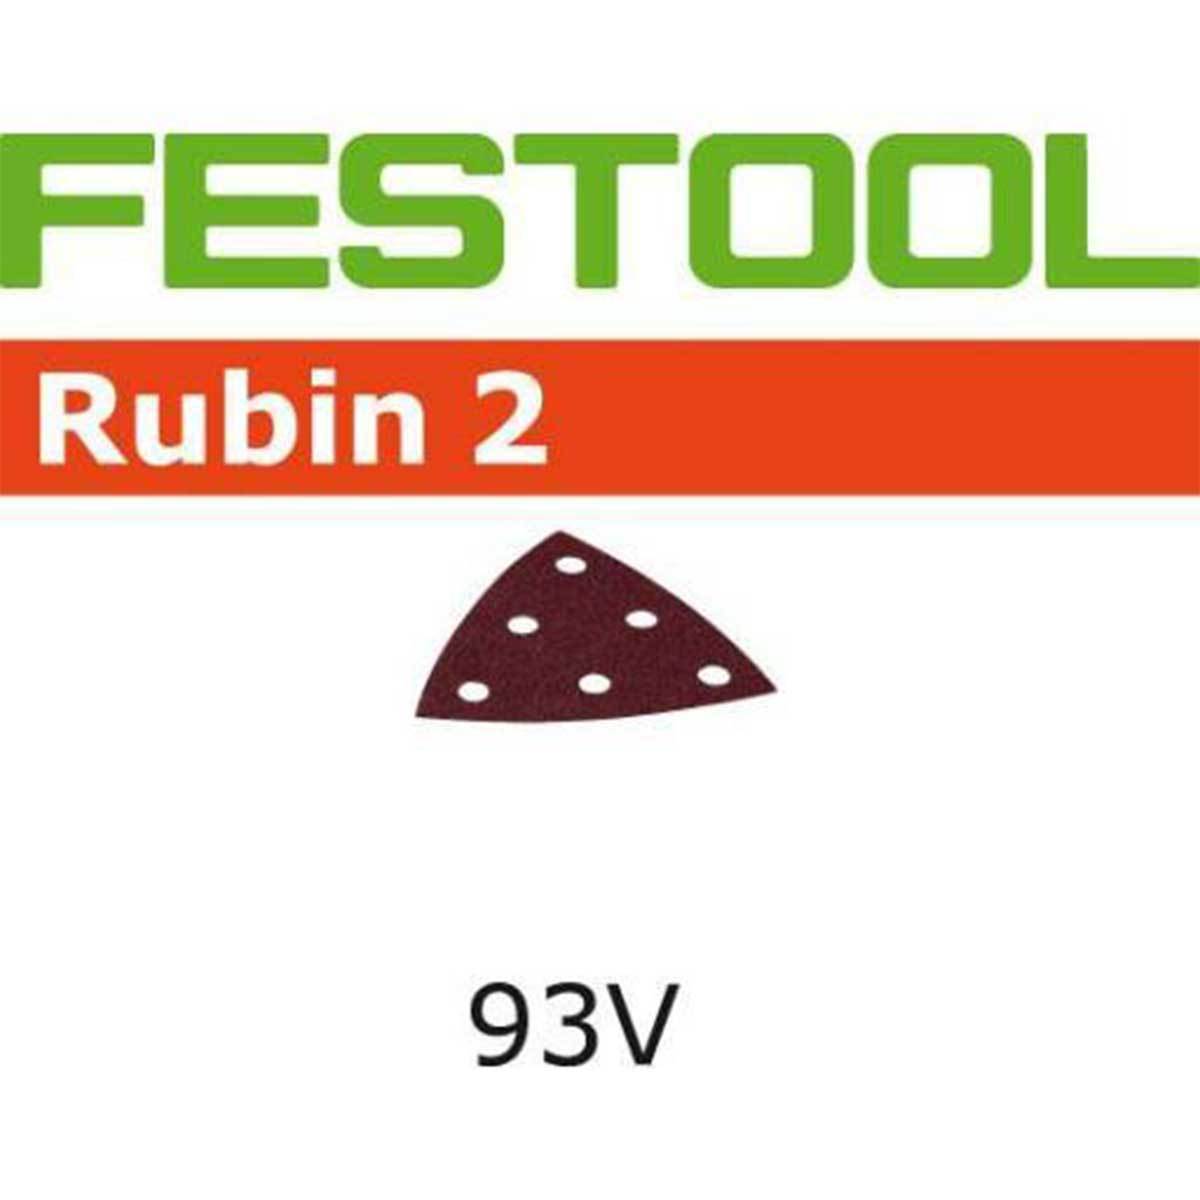 93mm delta aluminum oxide Rubin 2 abrasive sheet for use on bare wood with Festool's RO 90 triangular head for corners.